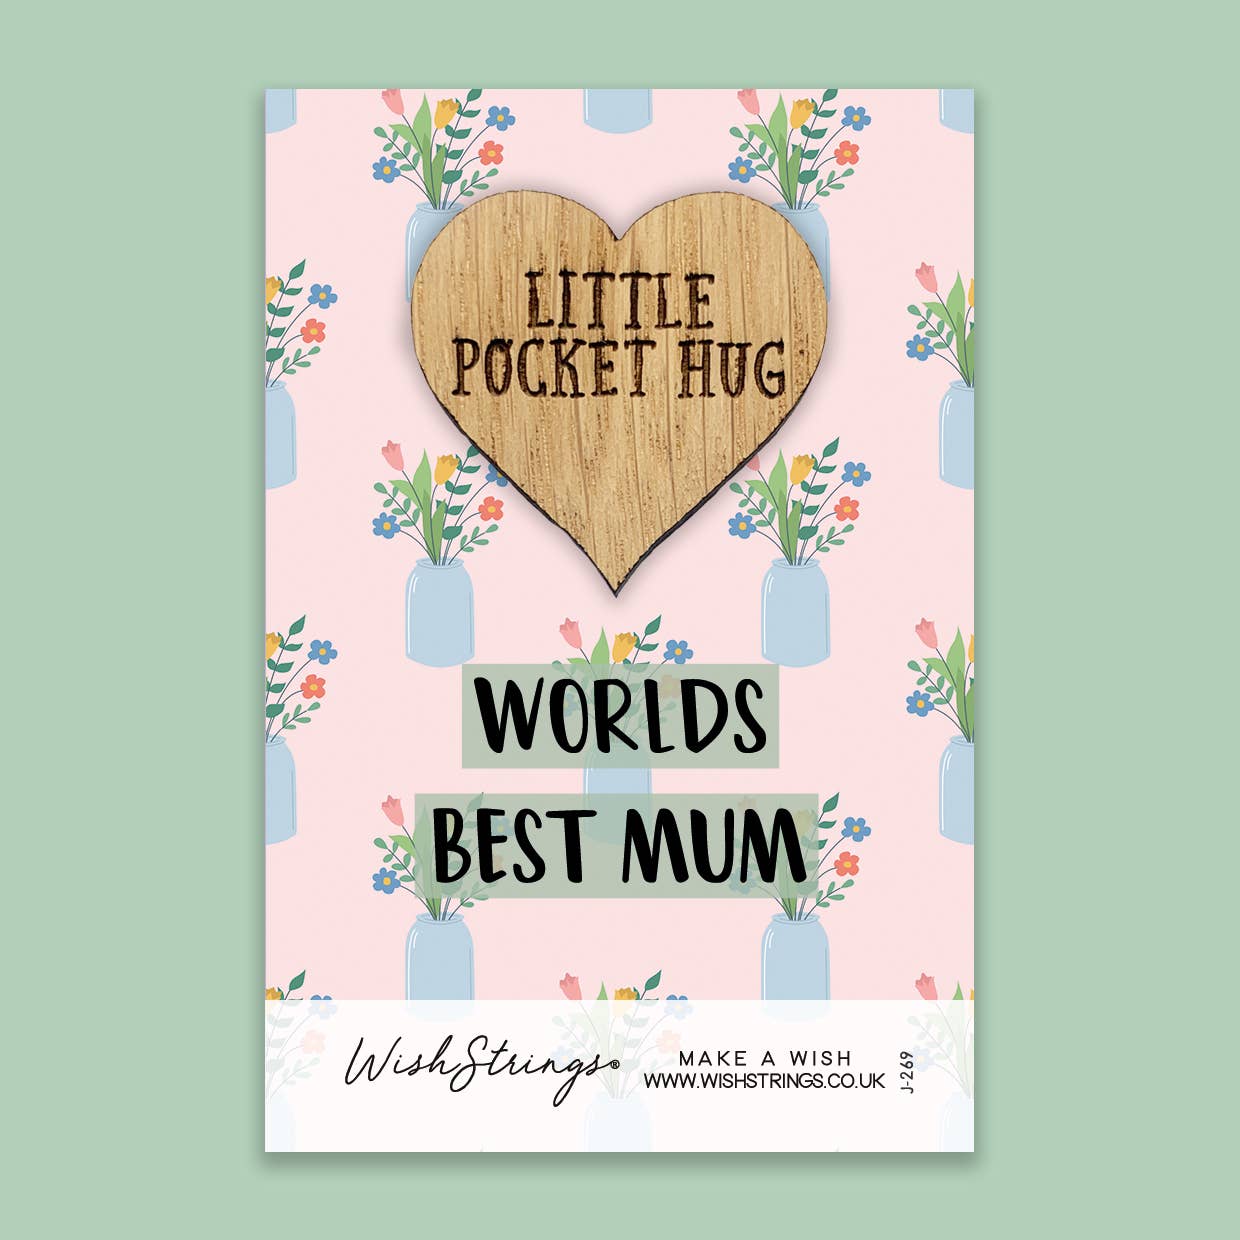 WishStrings - Worlds Best Mum - Pocket Hug - Keepsake Pocket Token